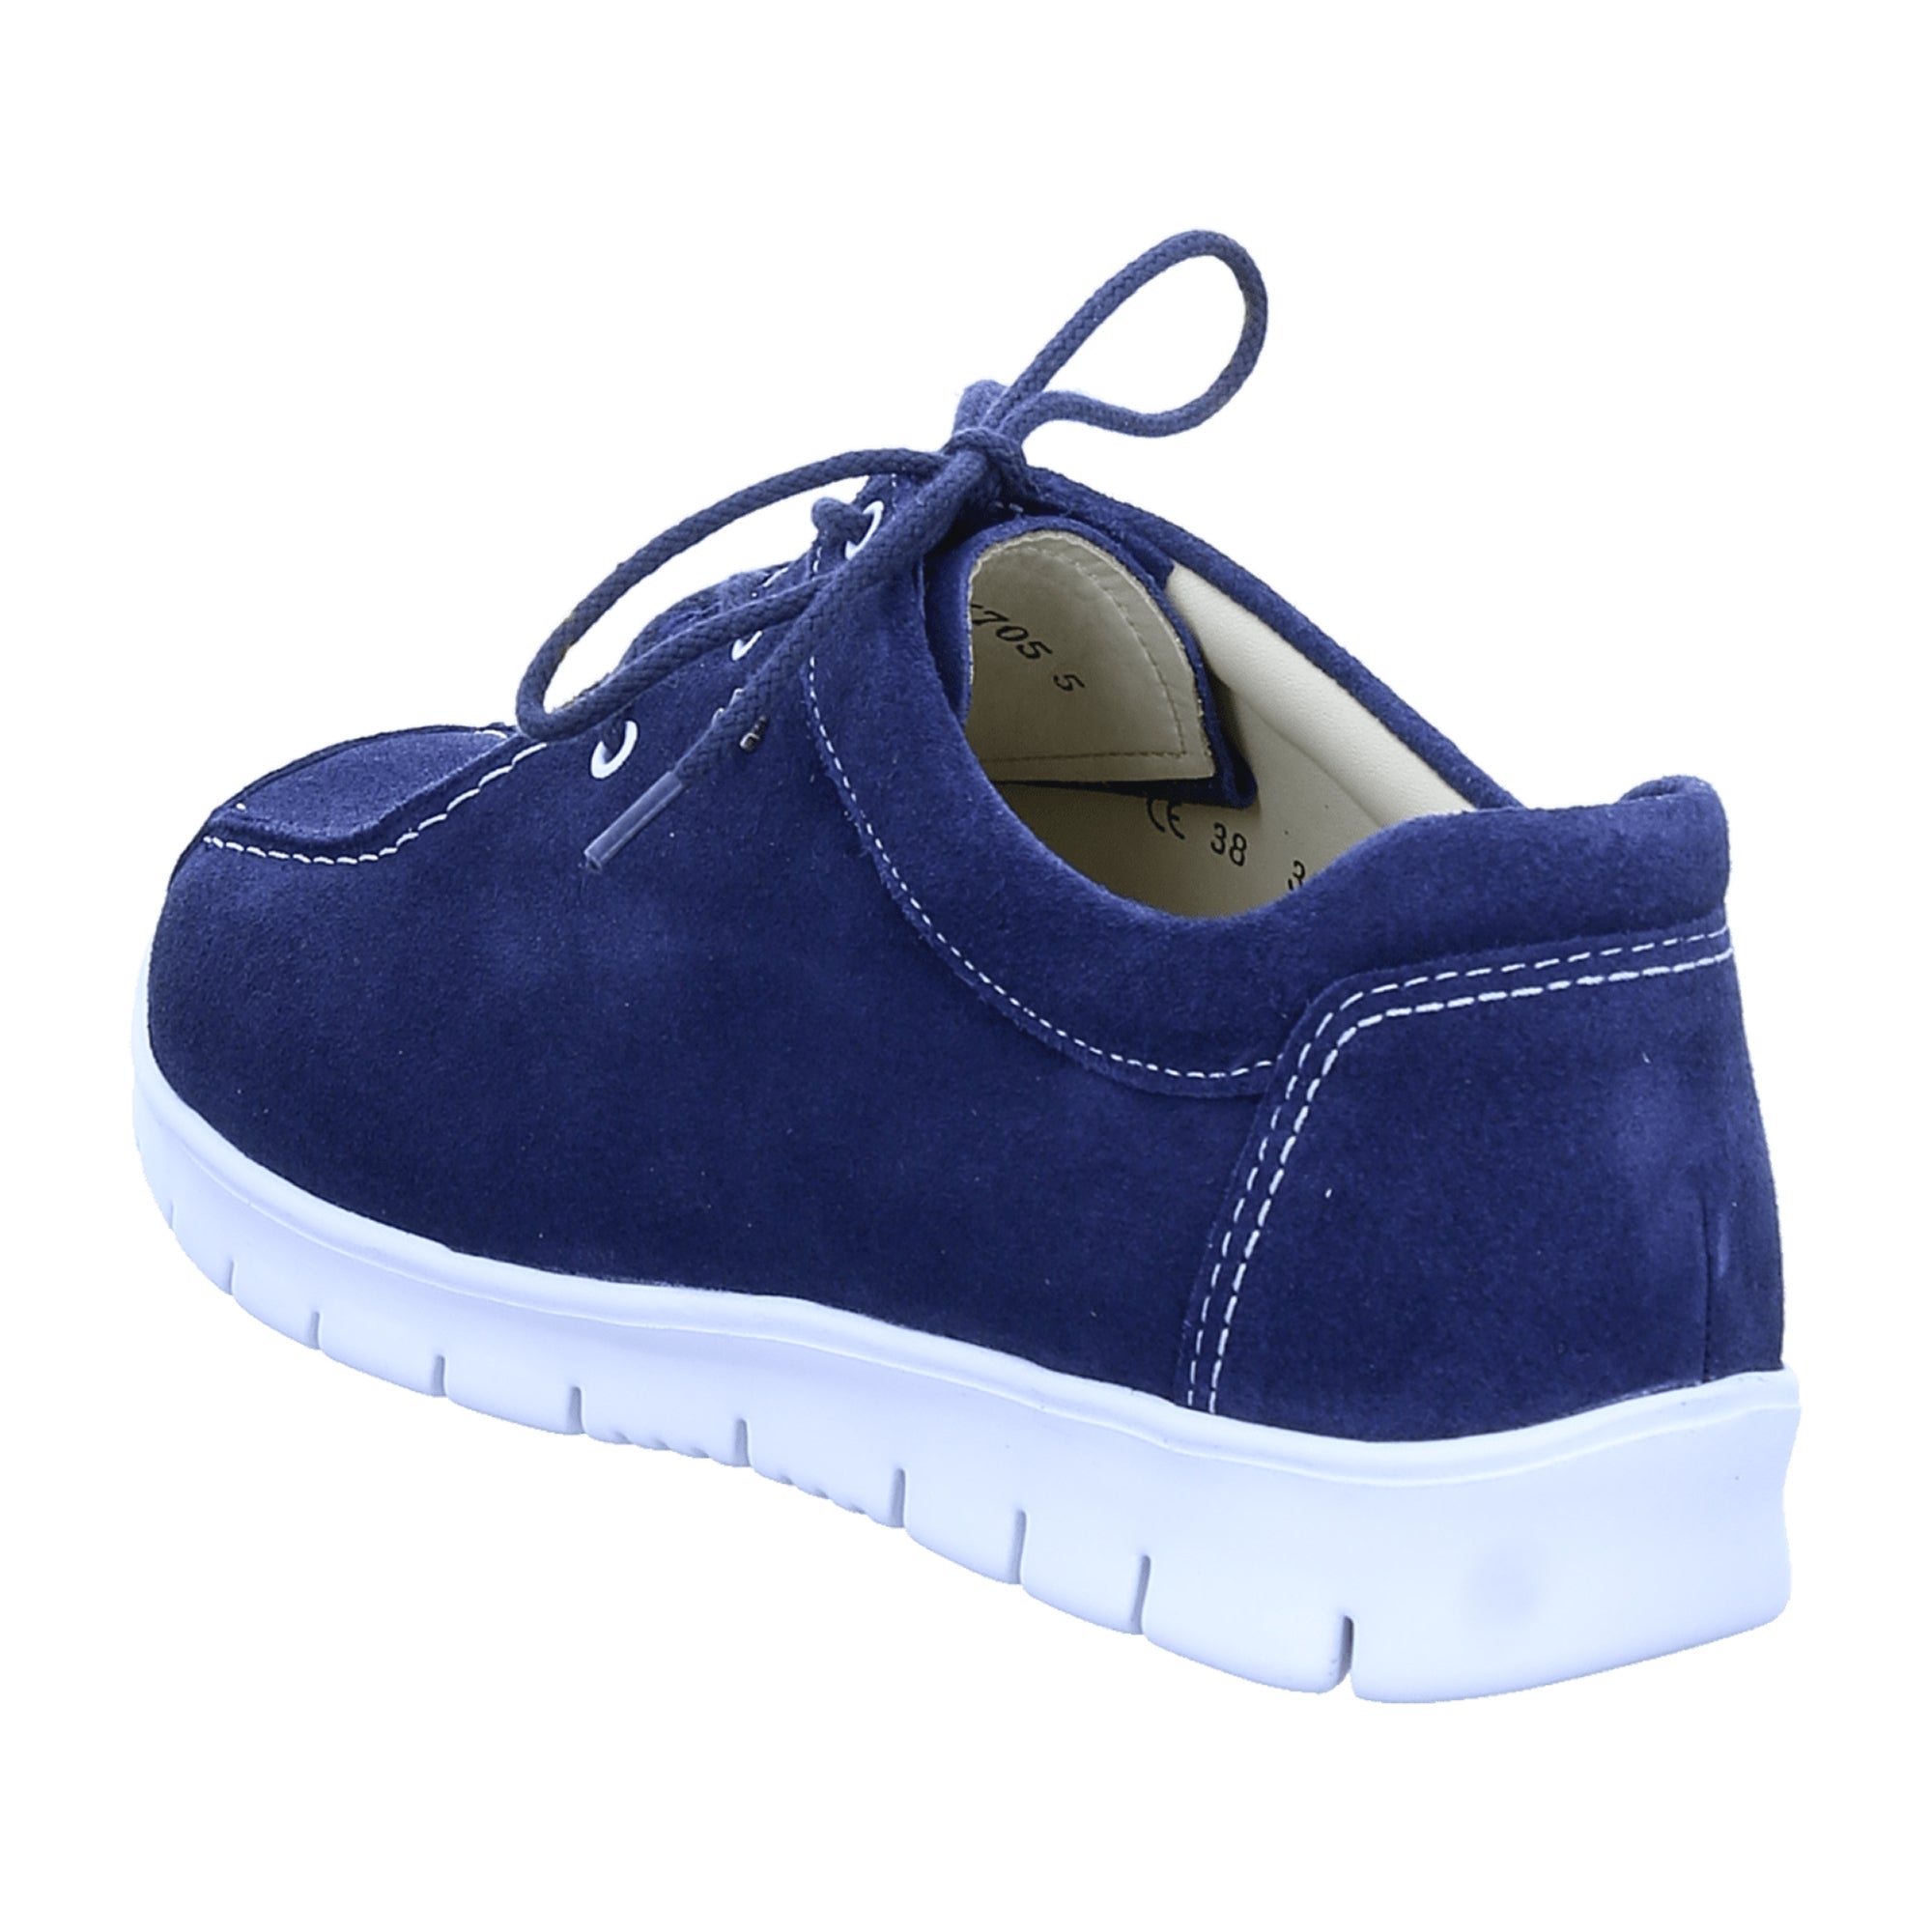 Finn Comfort Bahia Women's Sandals, Stylish Blue Comfort Footwear